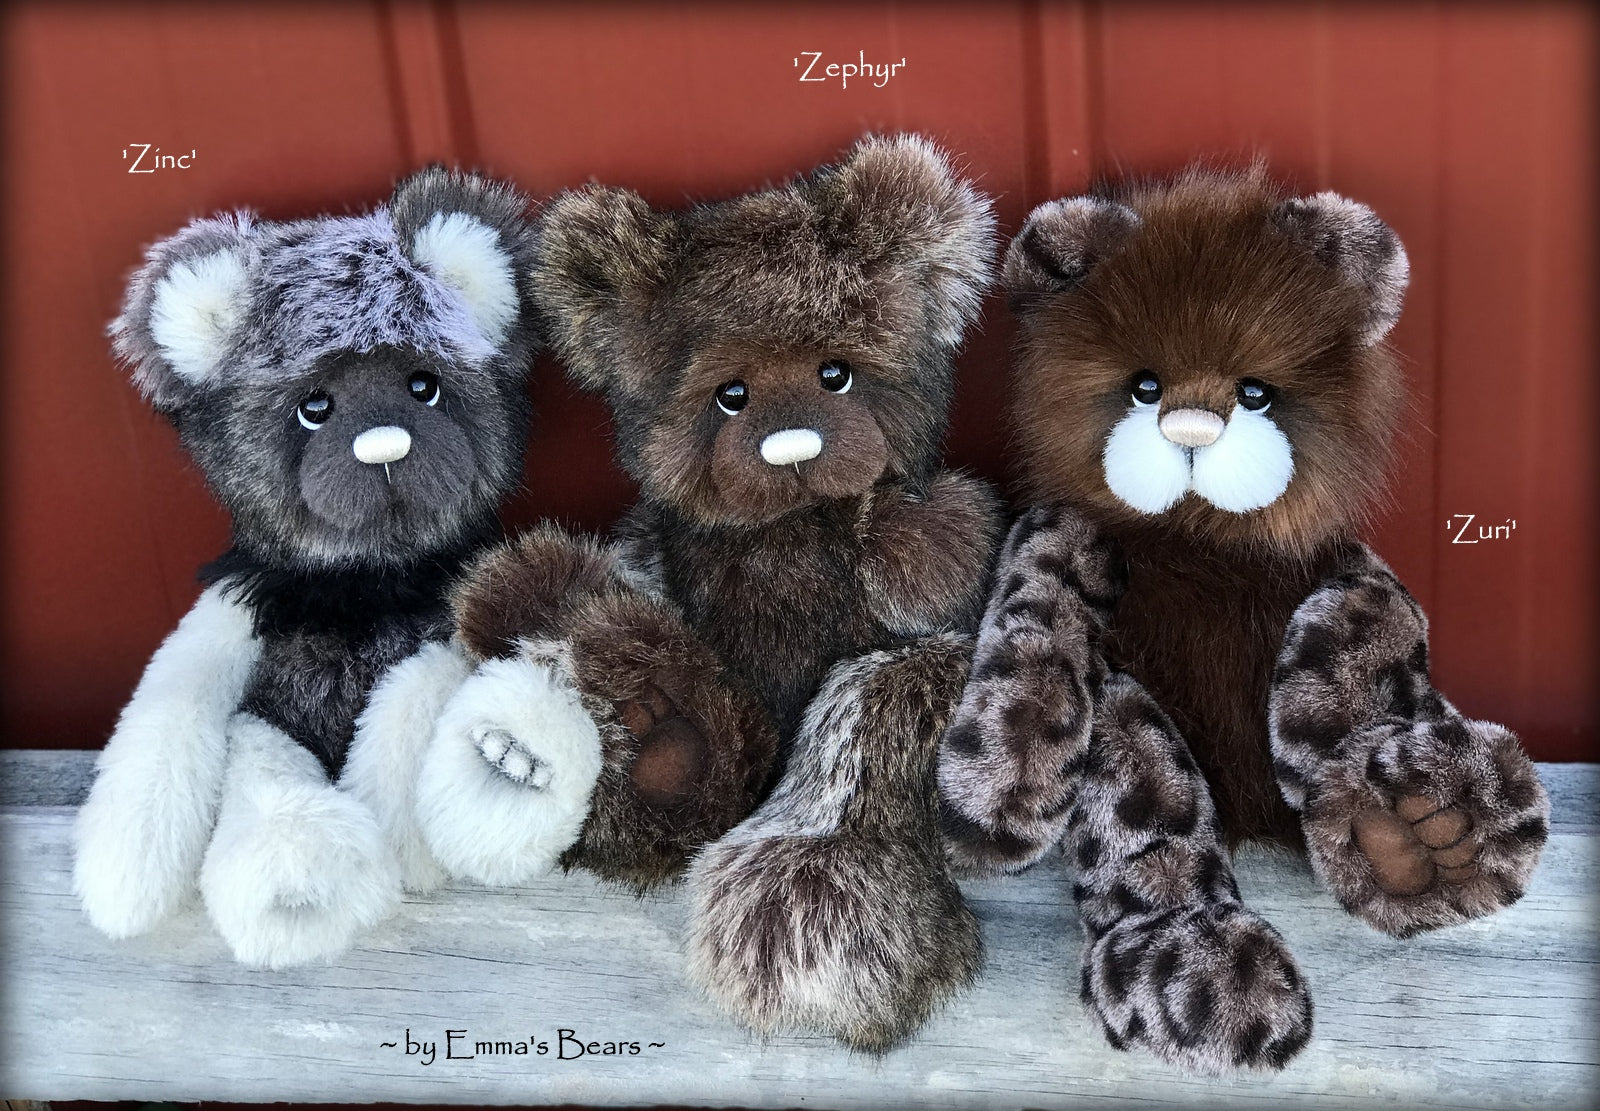 Zinc - 13" Tissavel, mohair and alpaca artist bear by Emma's Bears - OOAK